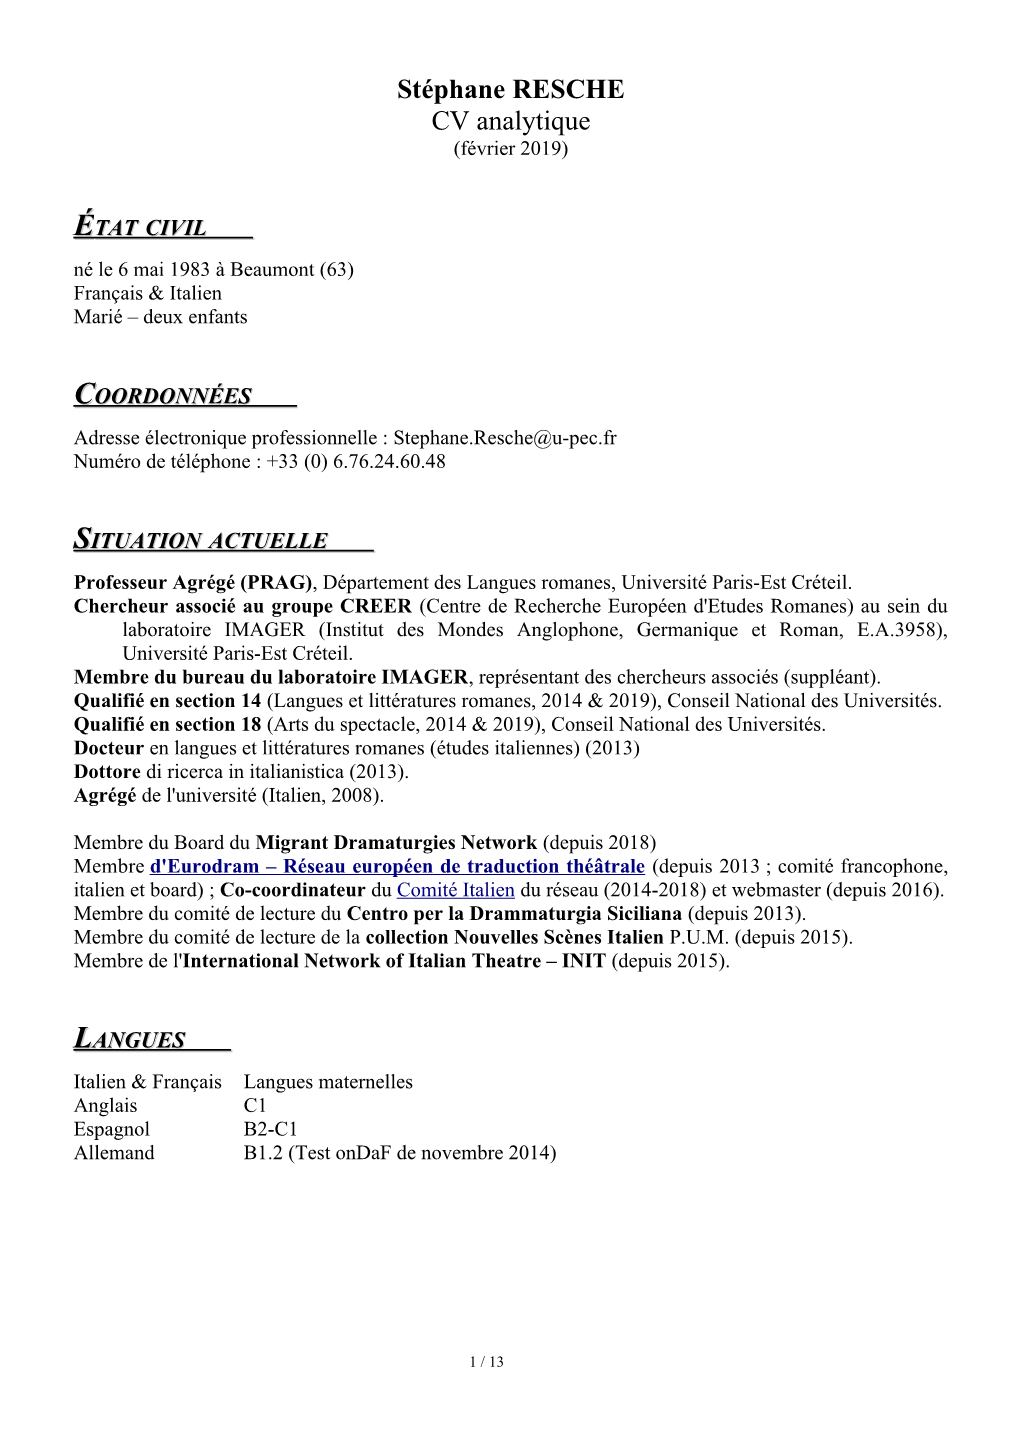 Stéphane RESCHE CV Analytique (Février 2019)